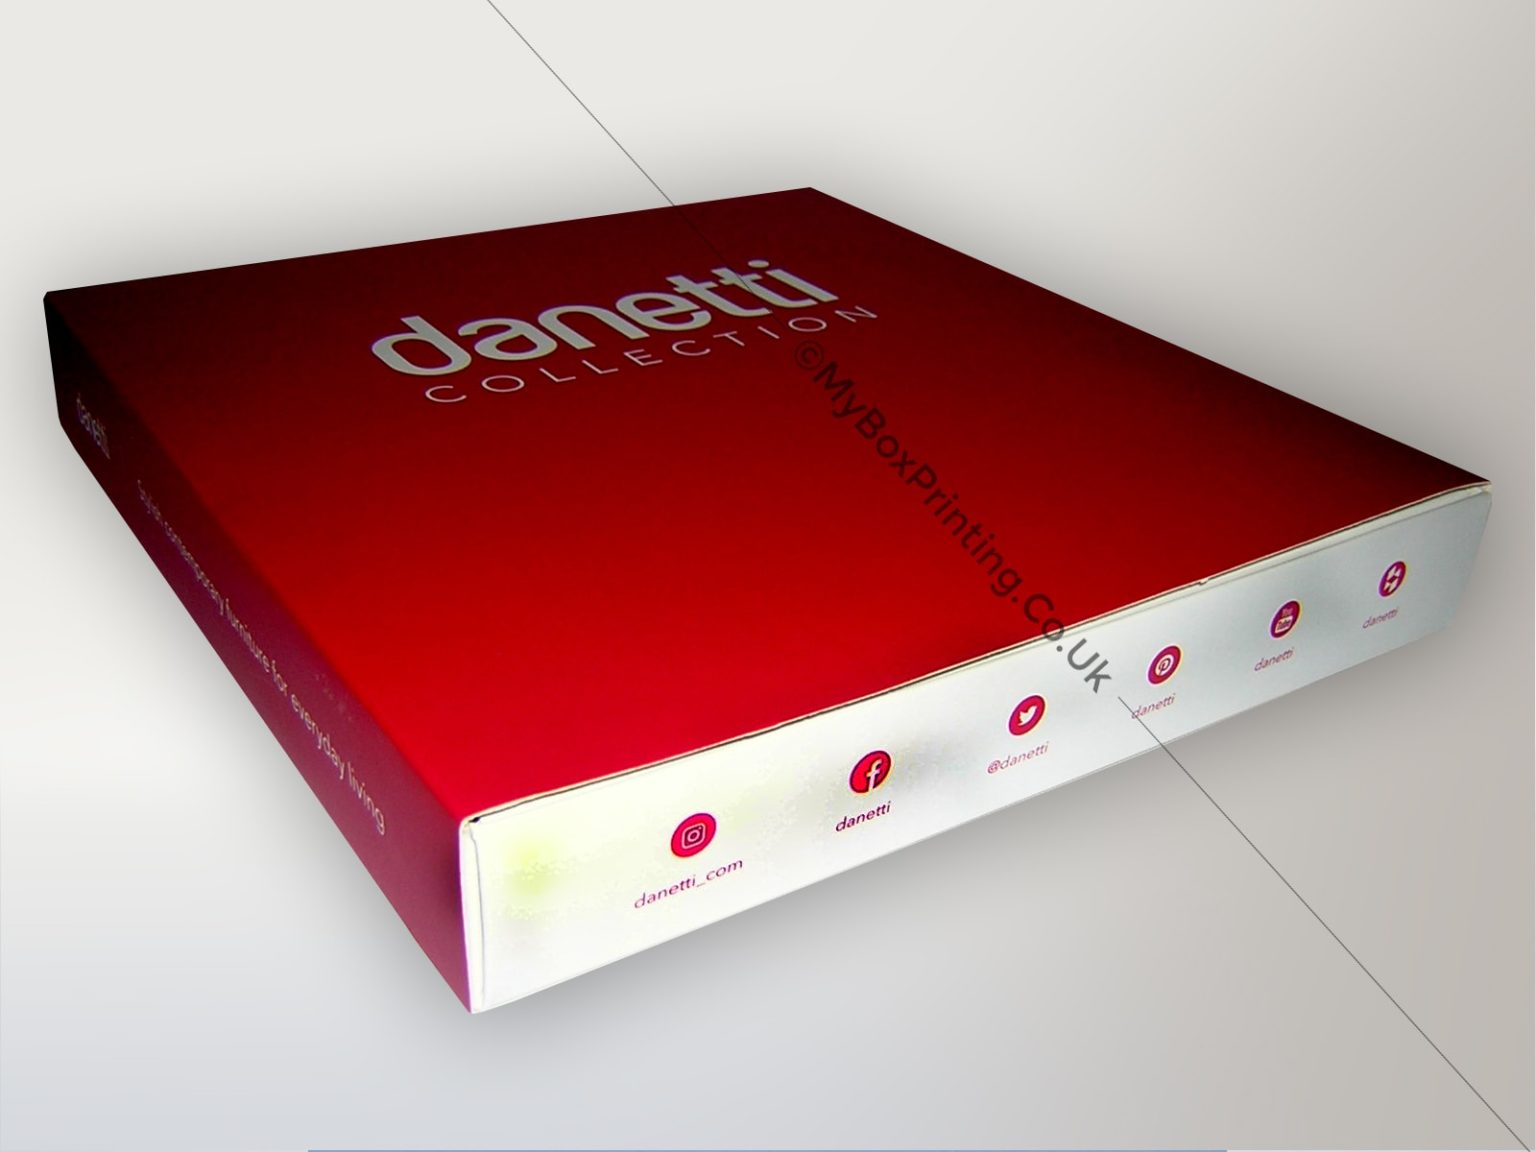 danetti - my box printing